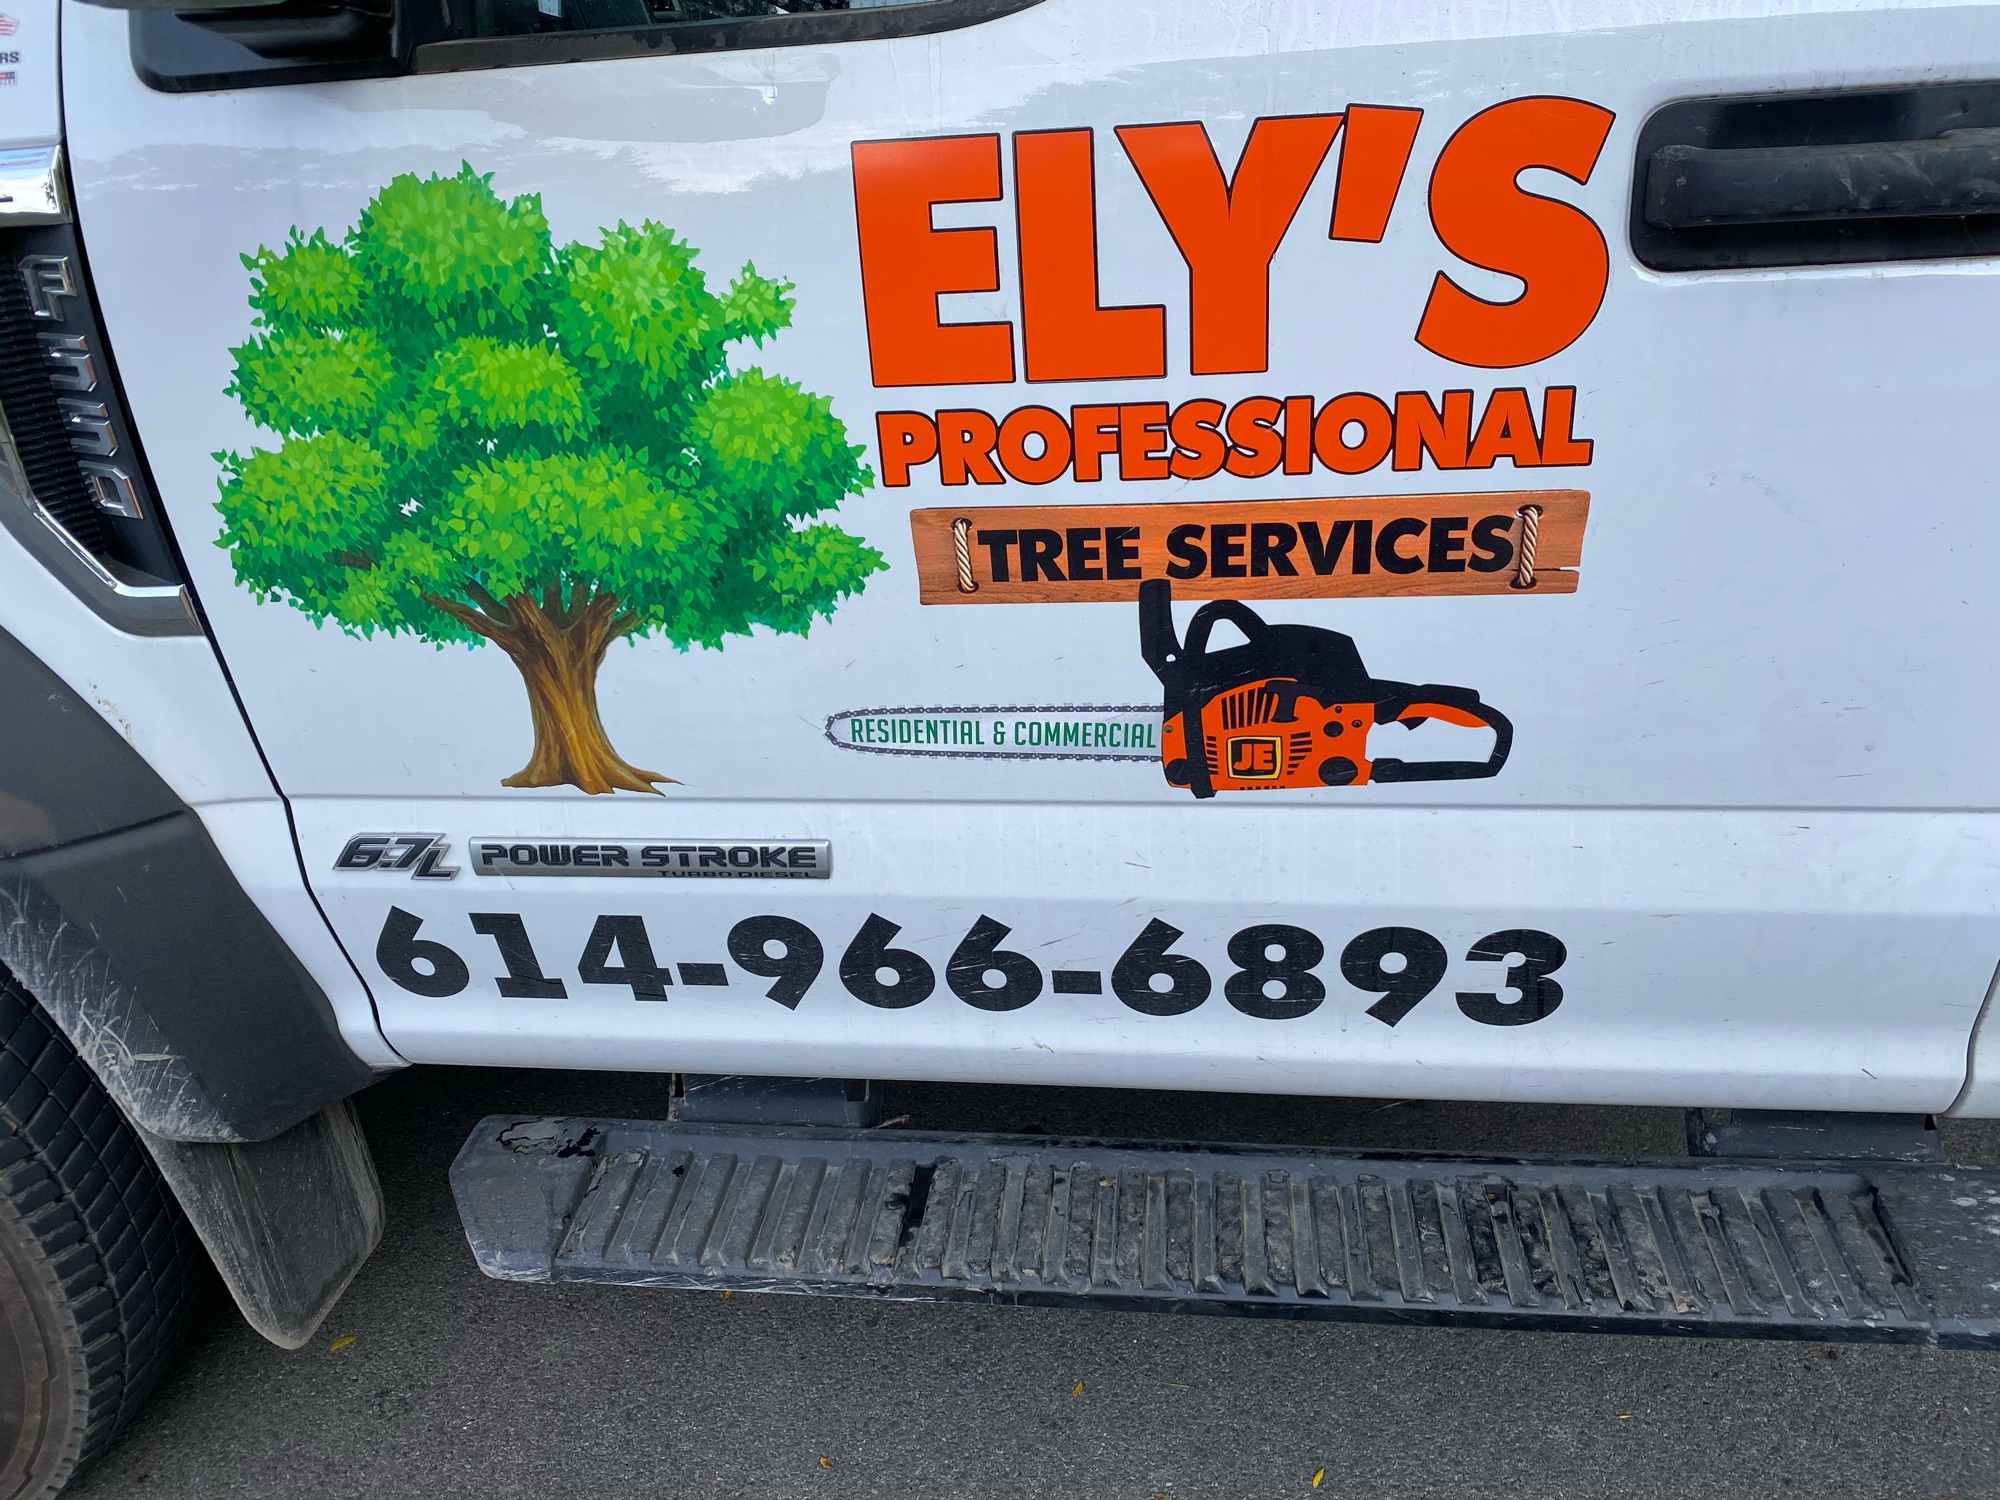 Ely's Tree Services Logo